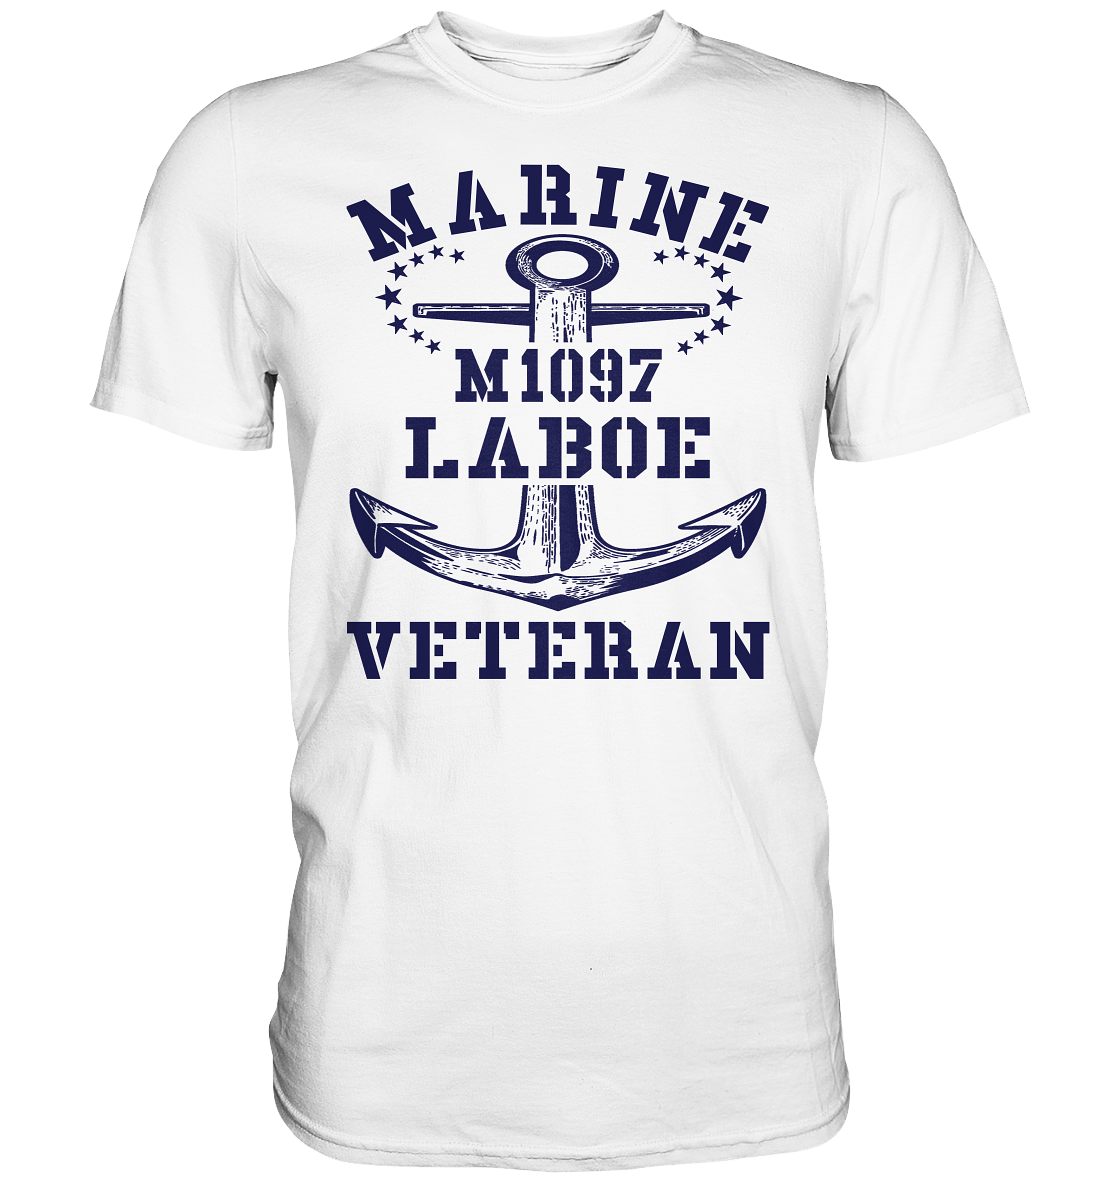 M1097 LABOE Marine Veteran - Premium Shirt